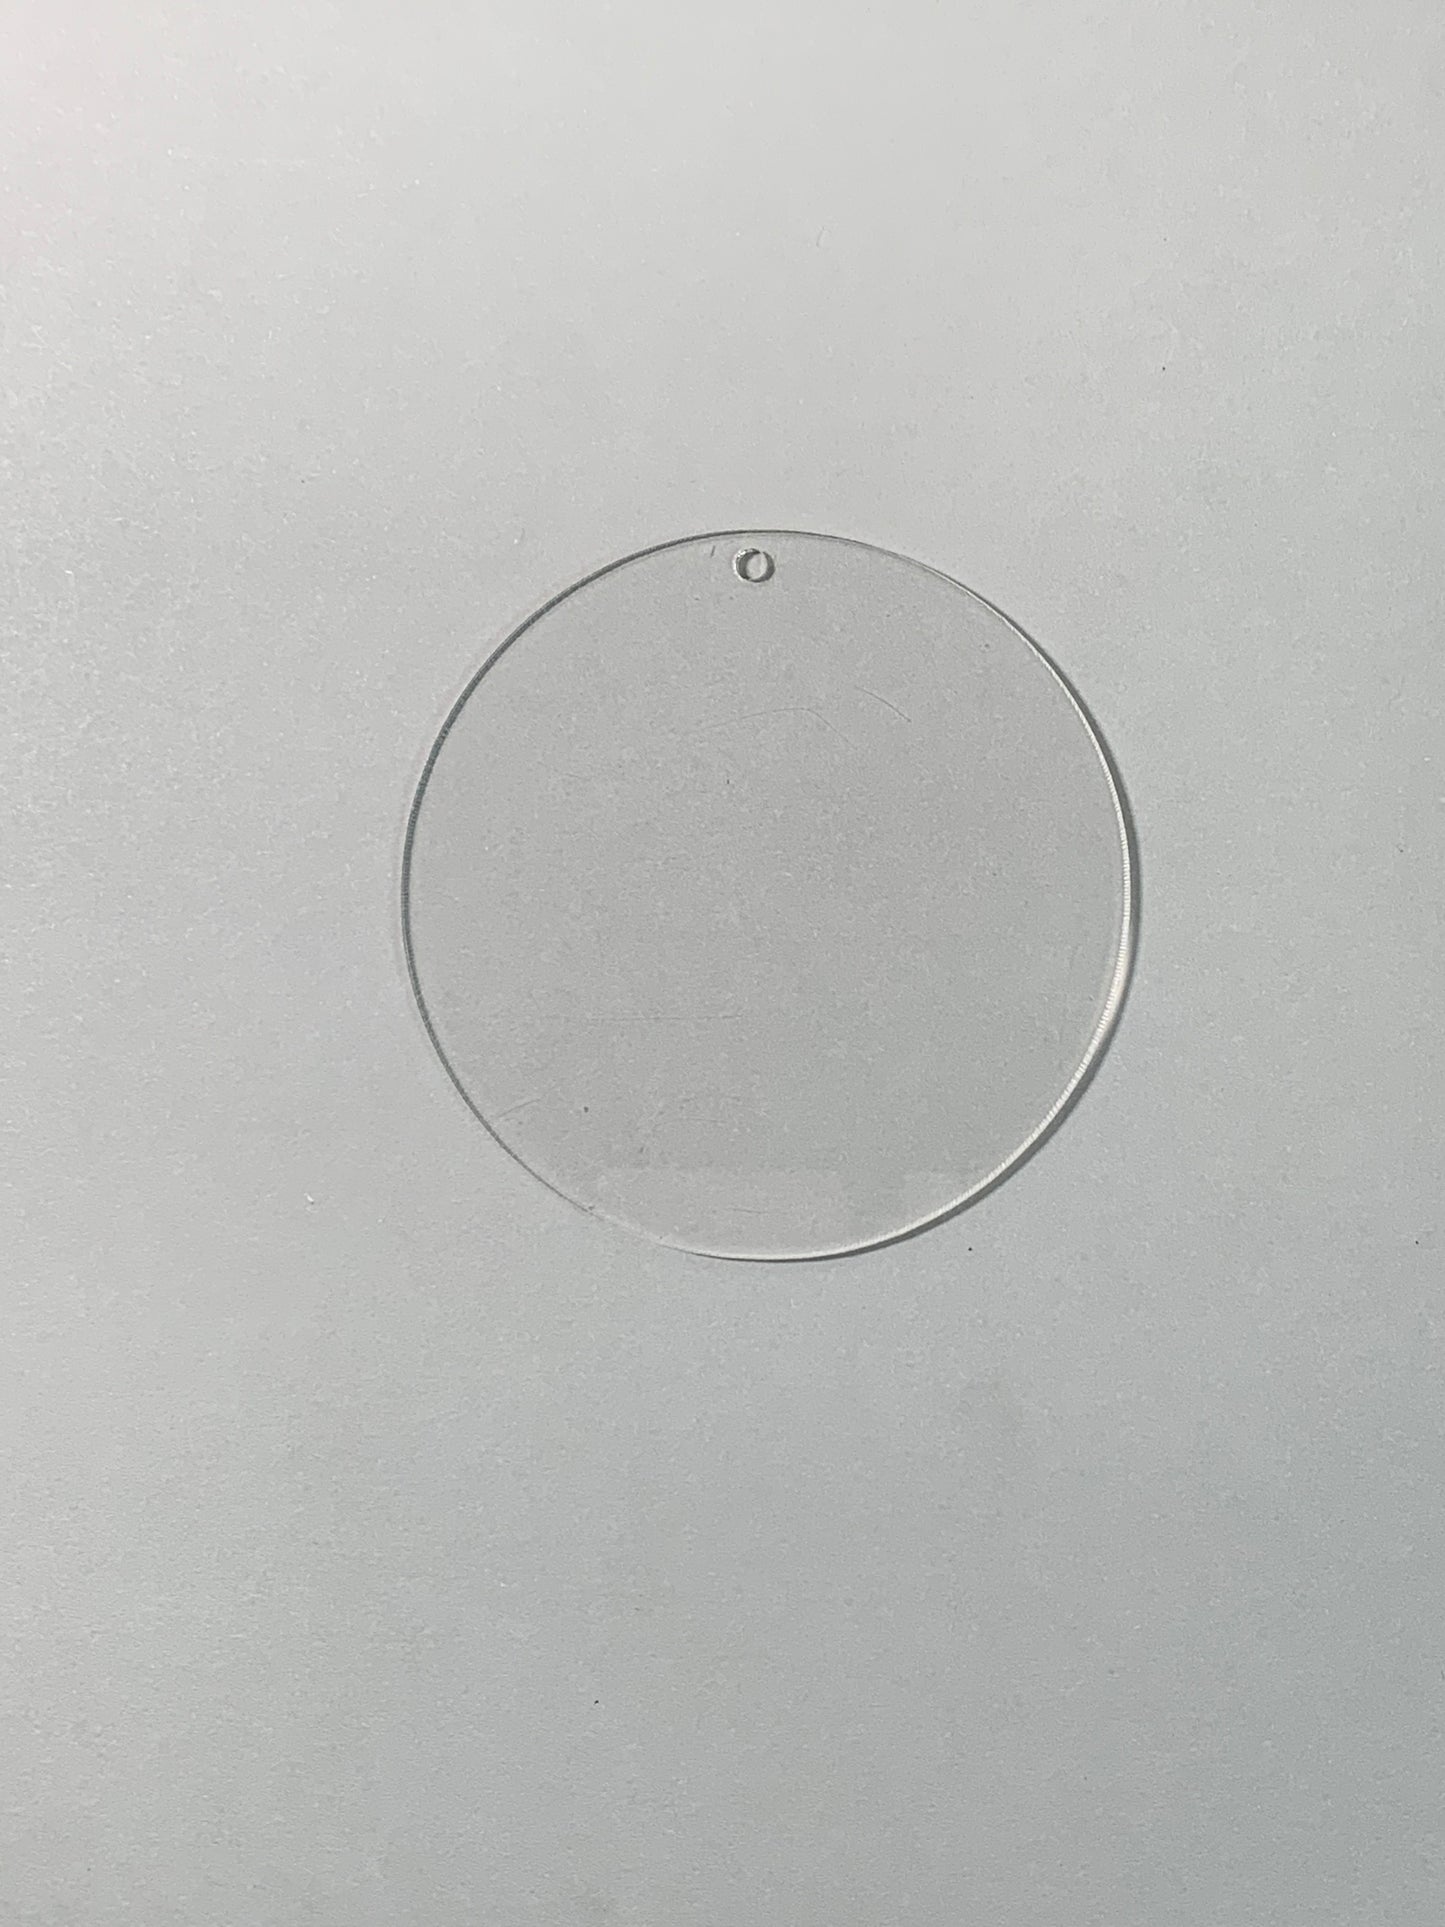 Ornament clear circle blank - 3" diameter